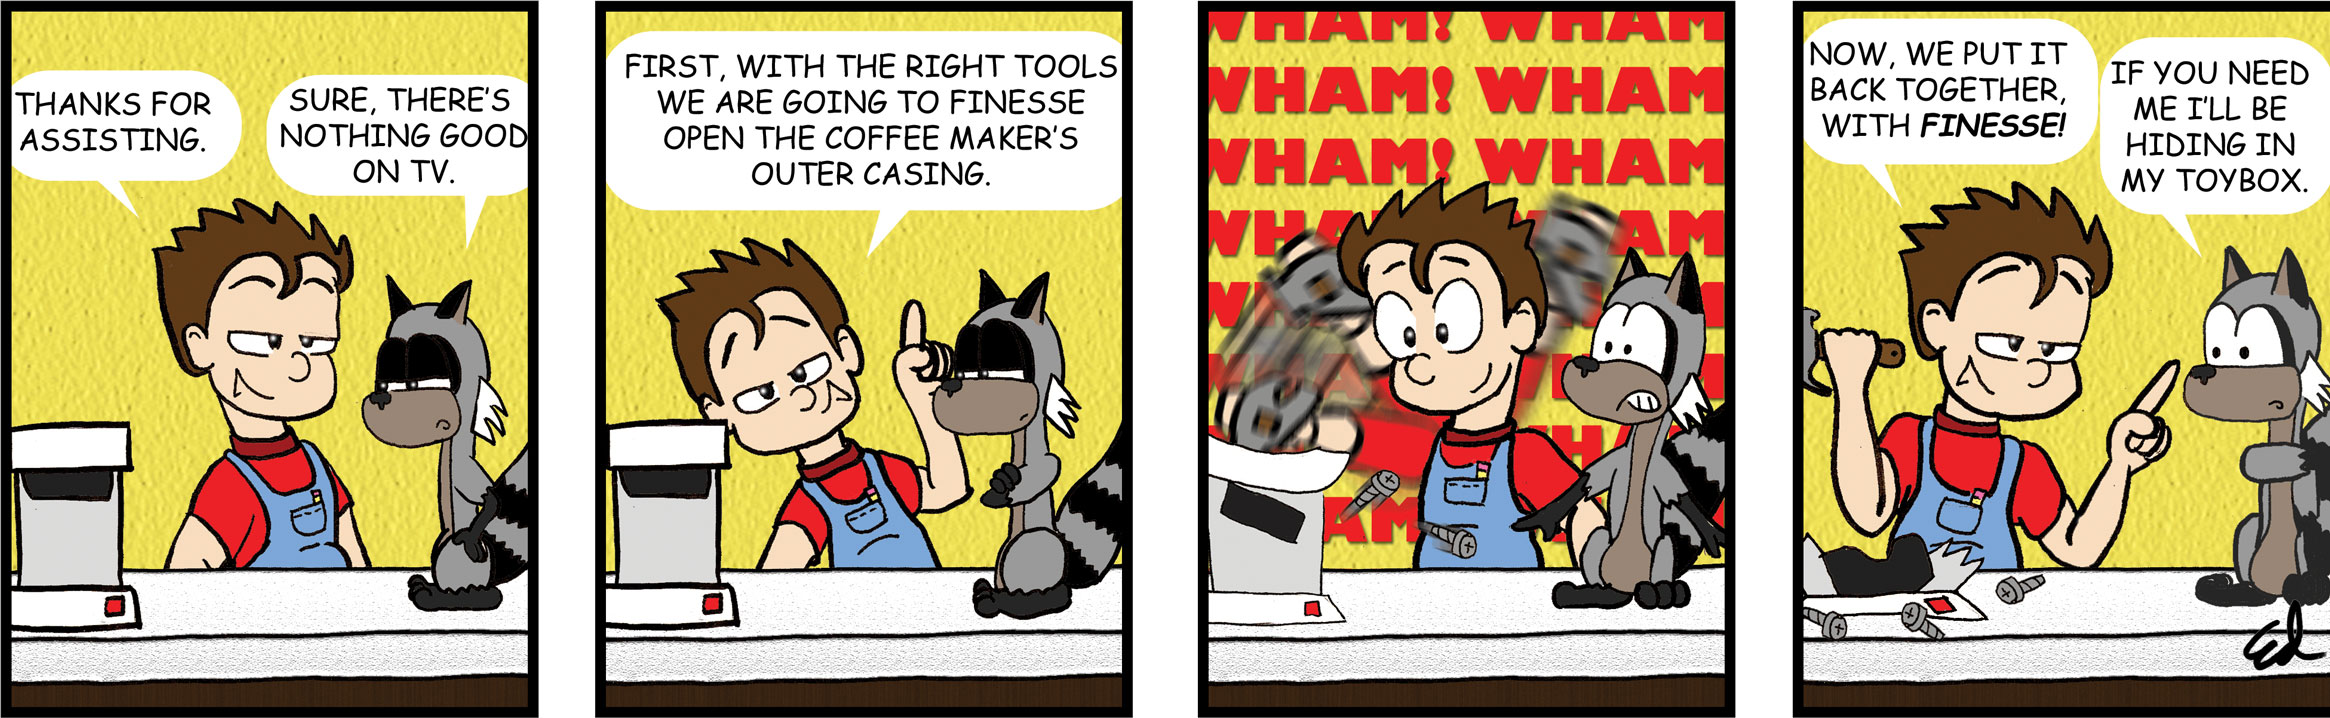 Coffee maker 4